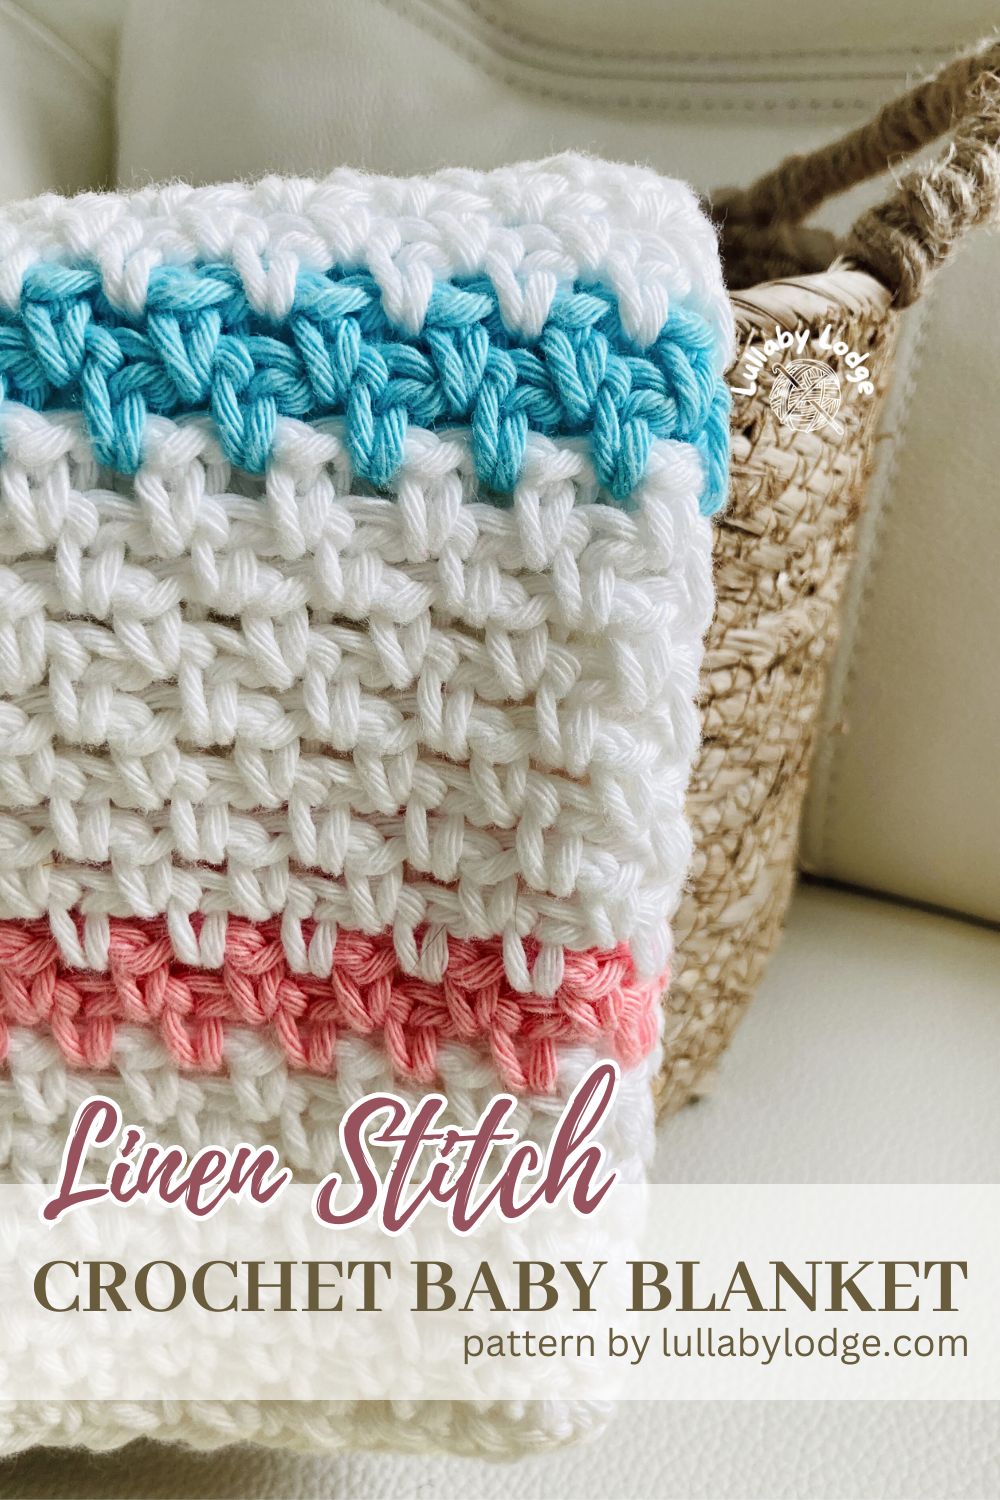 A Pinterest pin showing a crochet baby blanket